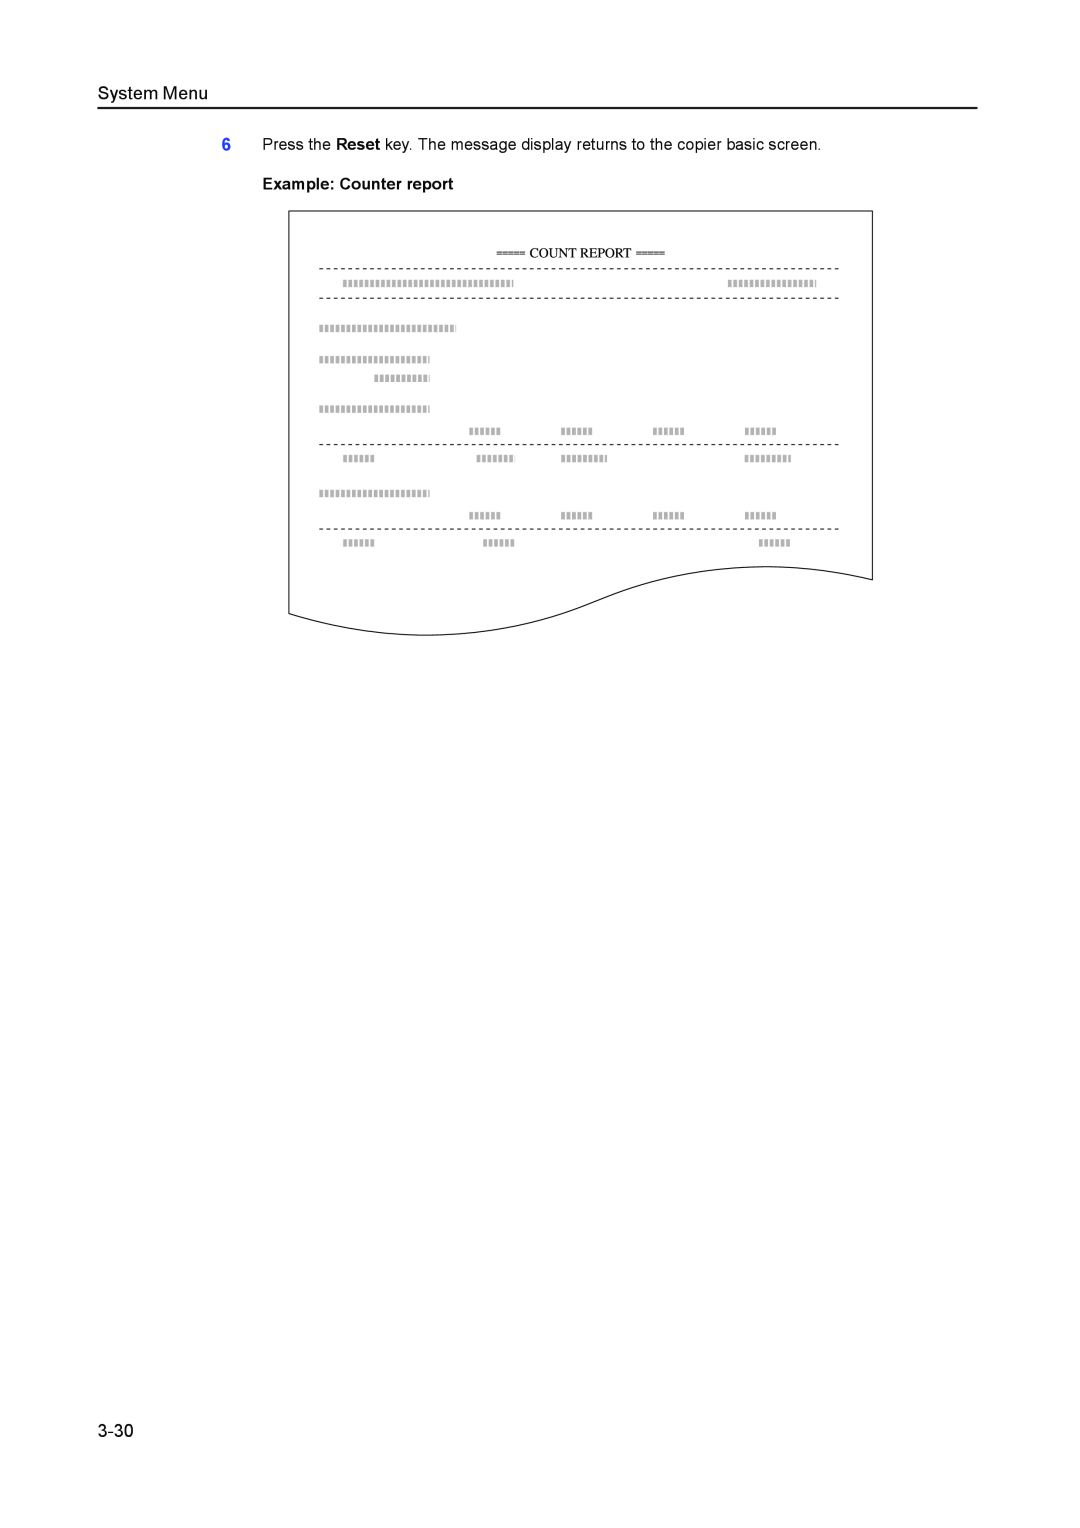 Kyocera 2050, 1650, 2550 manual 3-30, System Menu, Example Counter report 